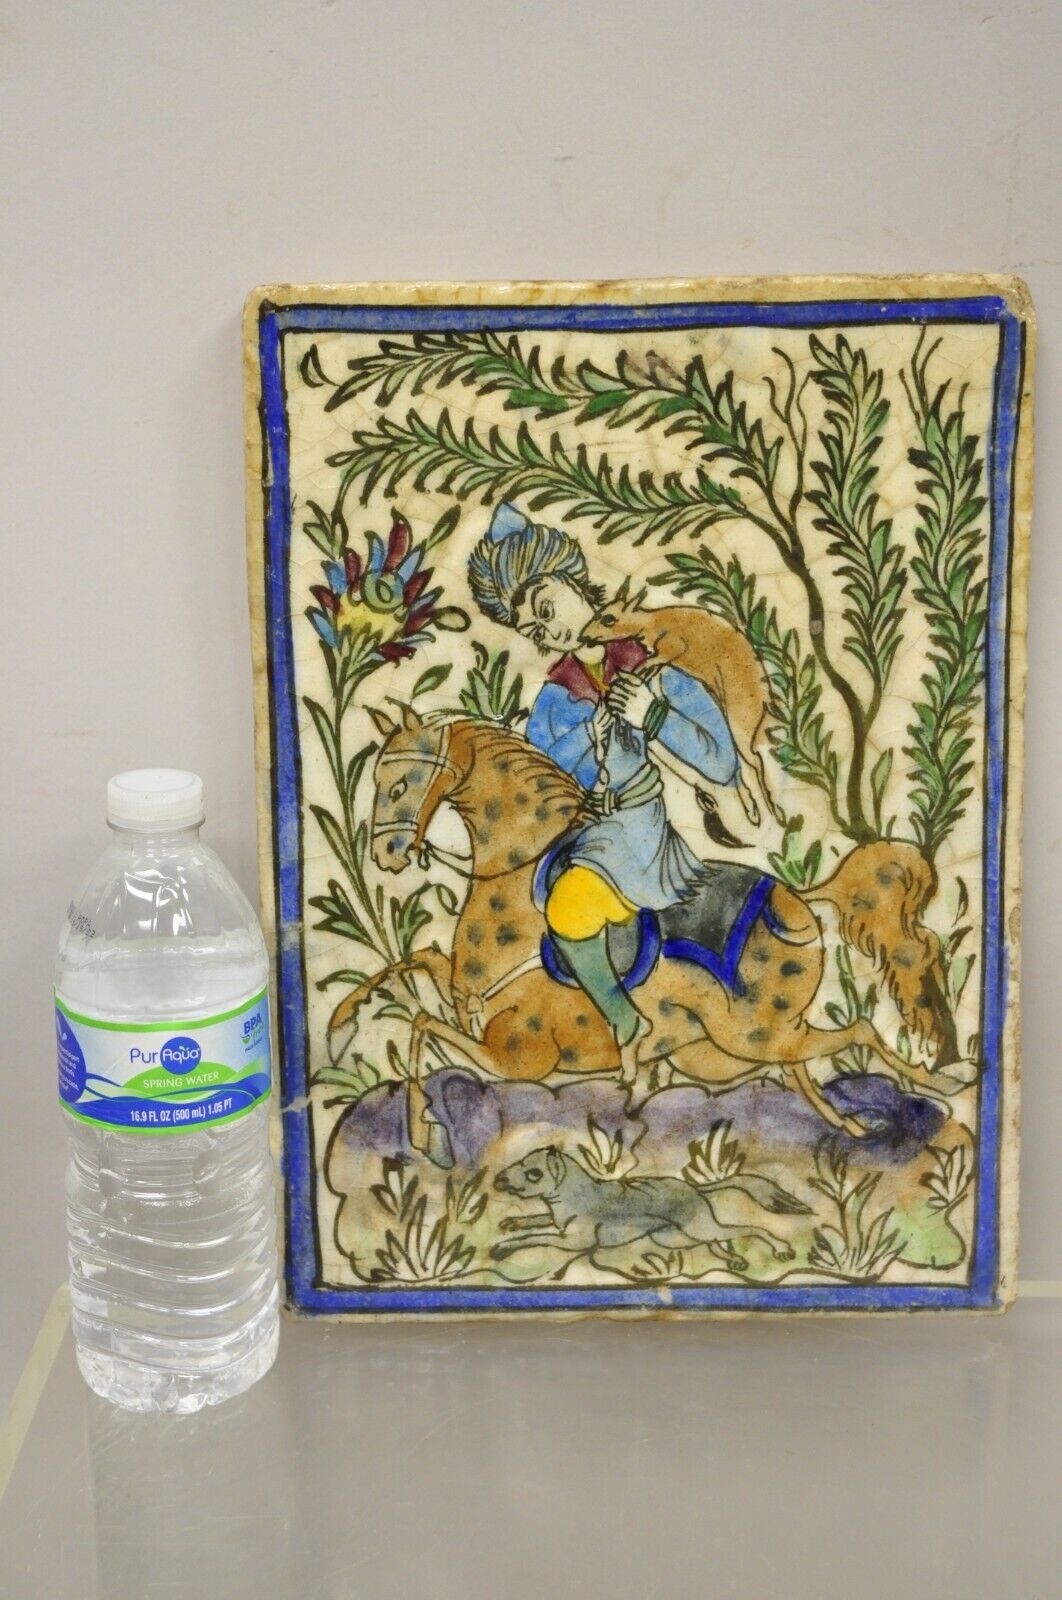 Antique Persian Iznik Qajar Style Ceramic Pottery Tile Horse Rider Hunt Scene C1